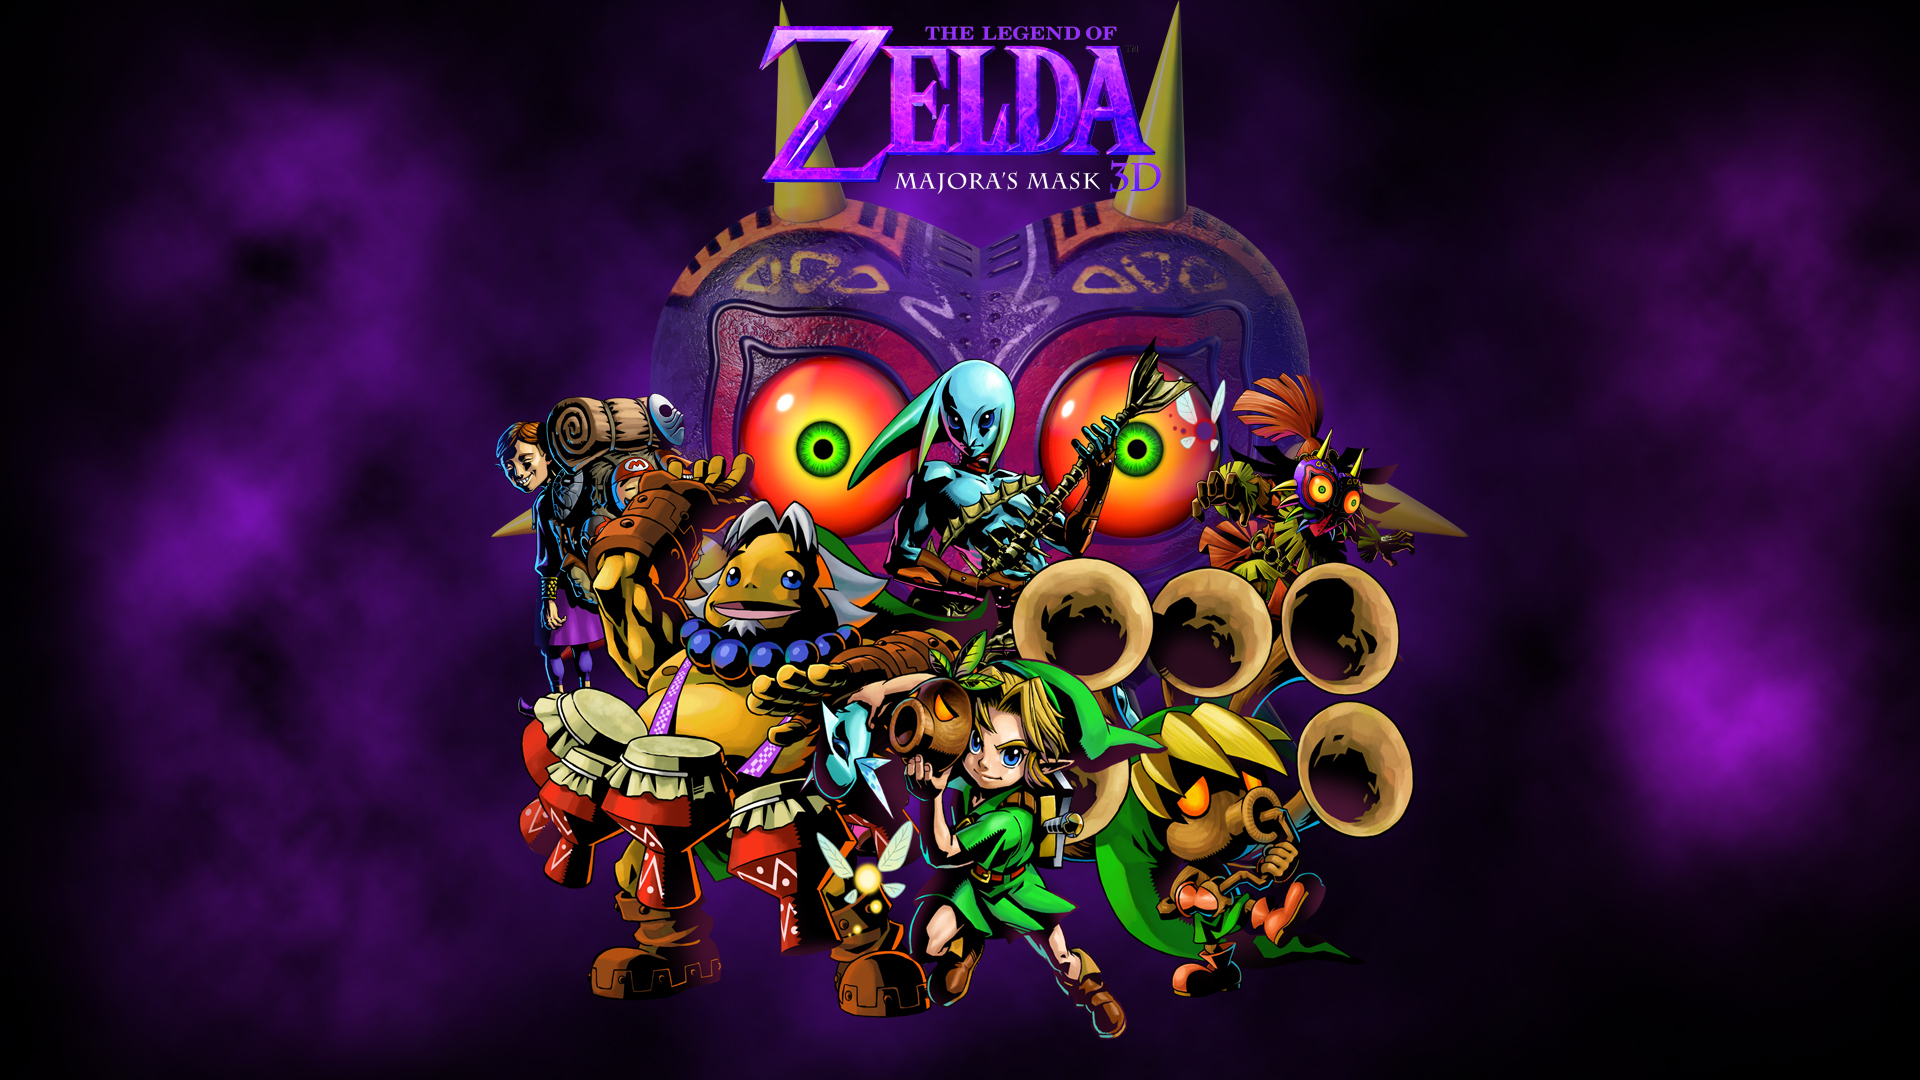 The Legend Of Zelda Majora’s Mask 2K Wallpapers and Backgrounds